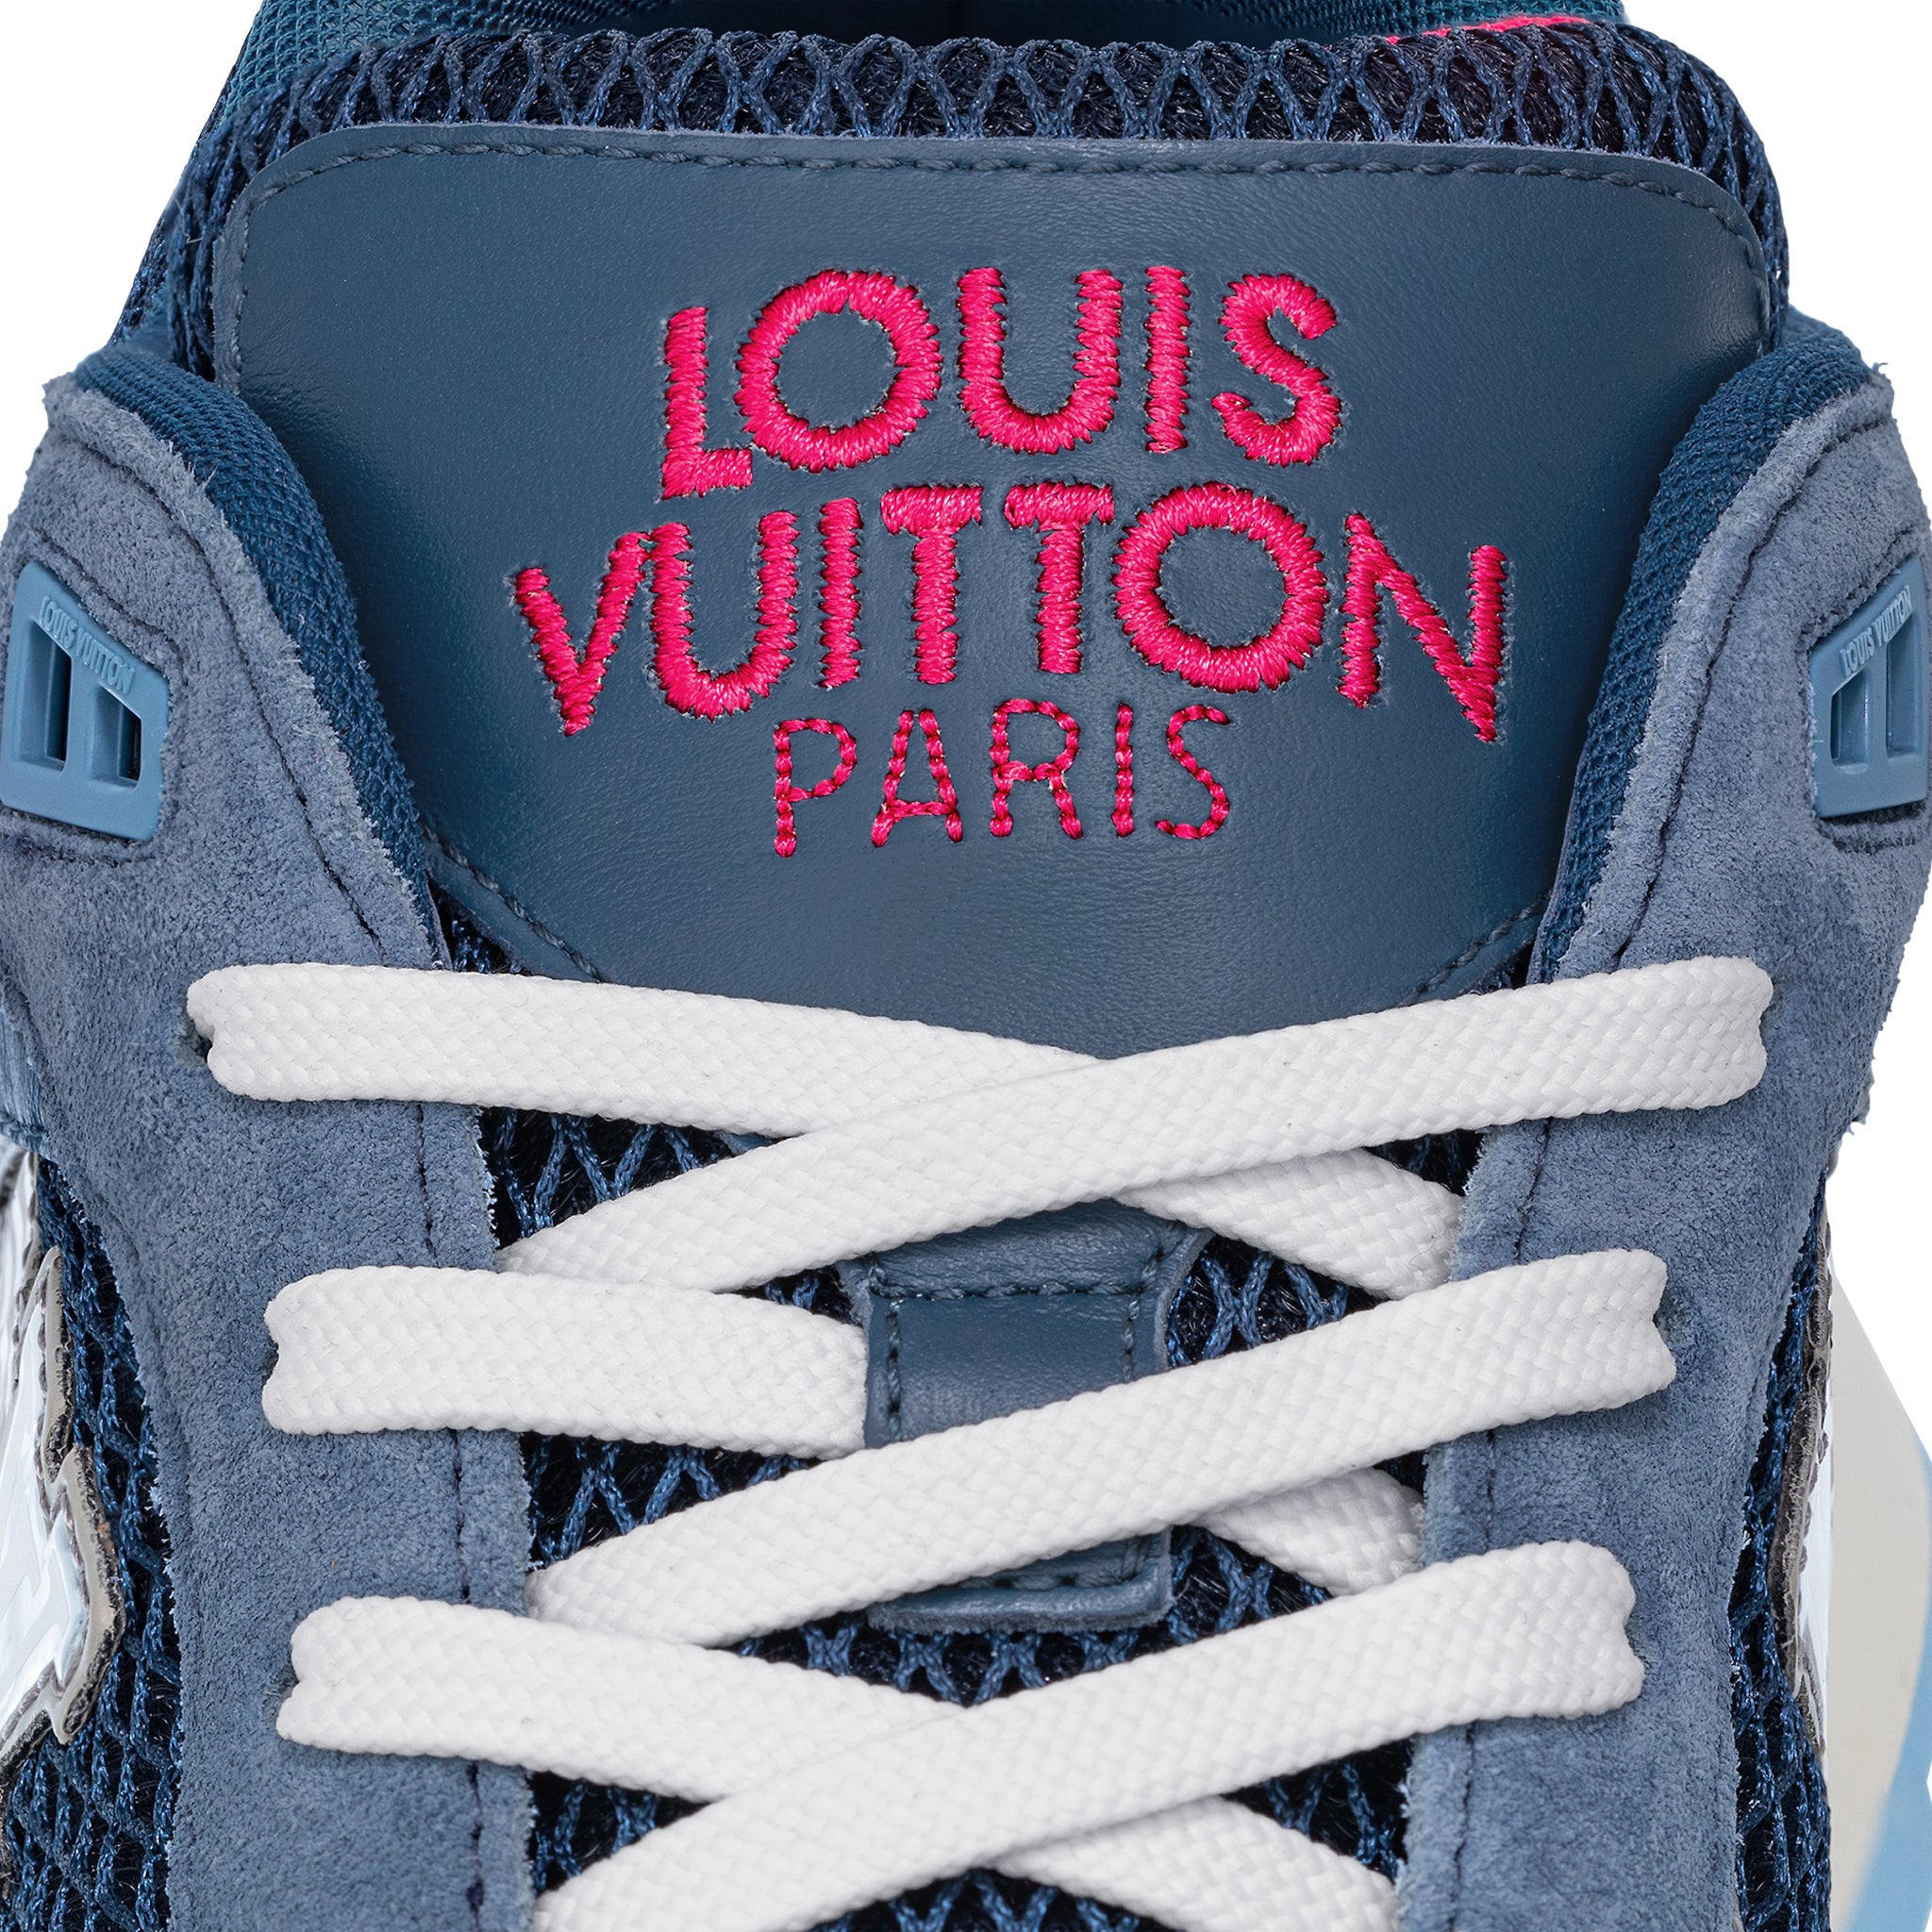 Image of Louis Vuitton LV Run Away Blue Sneaker